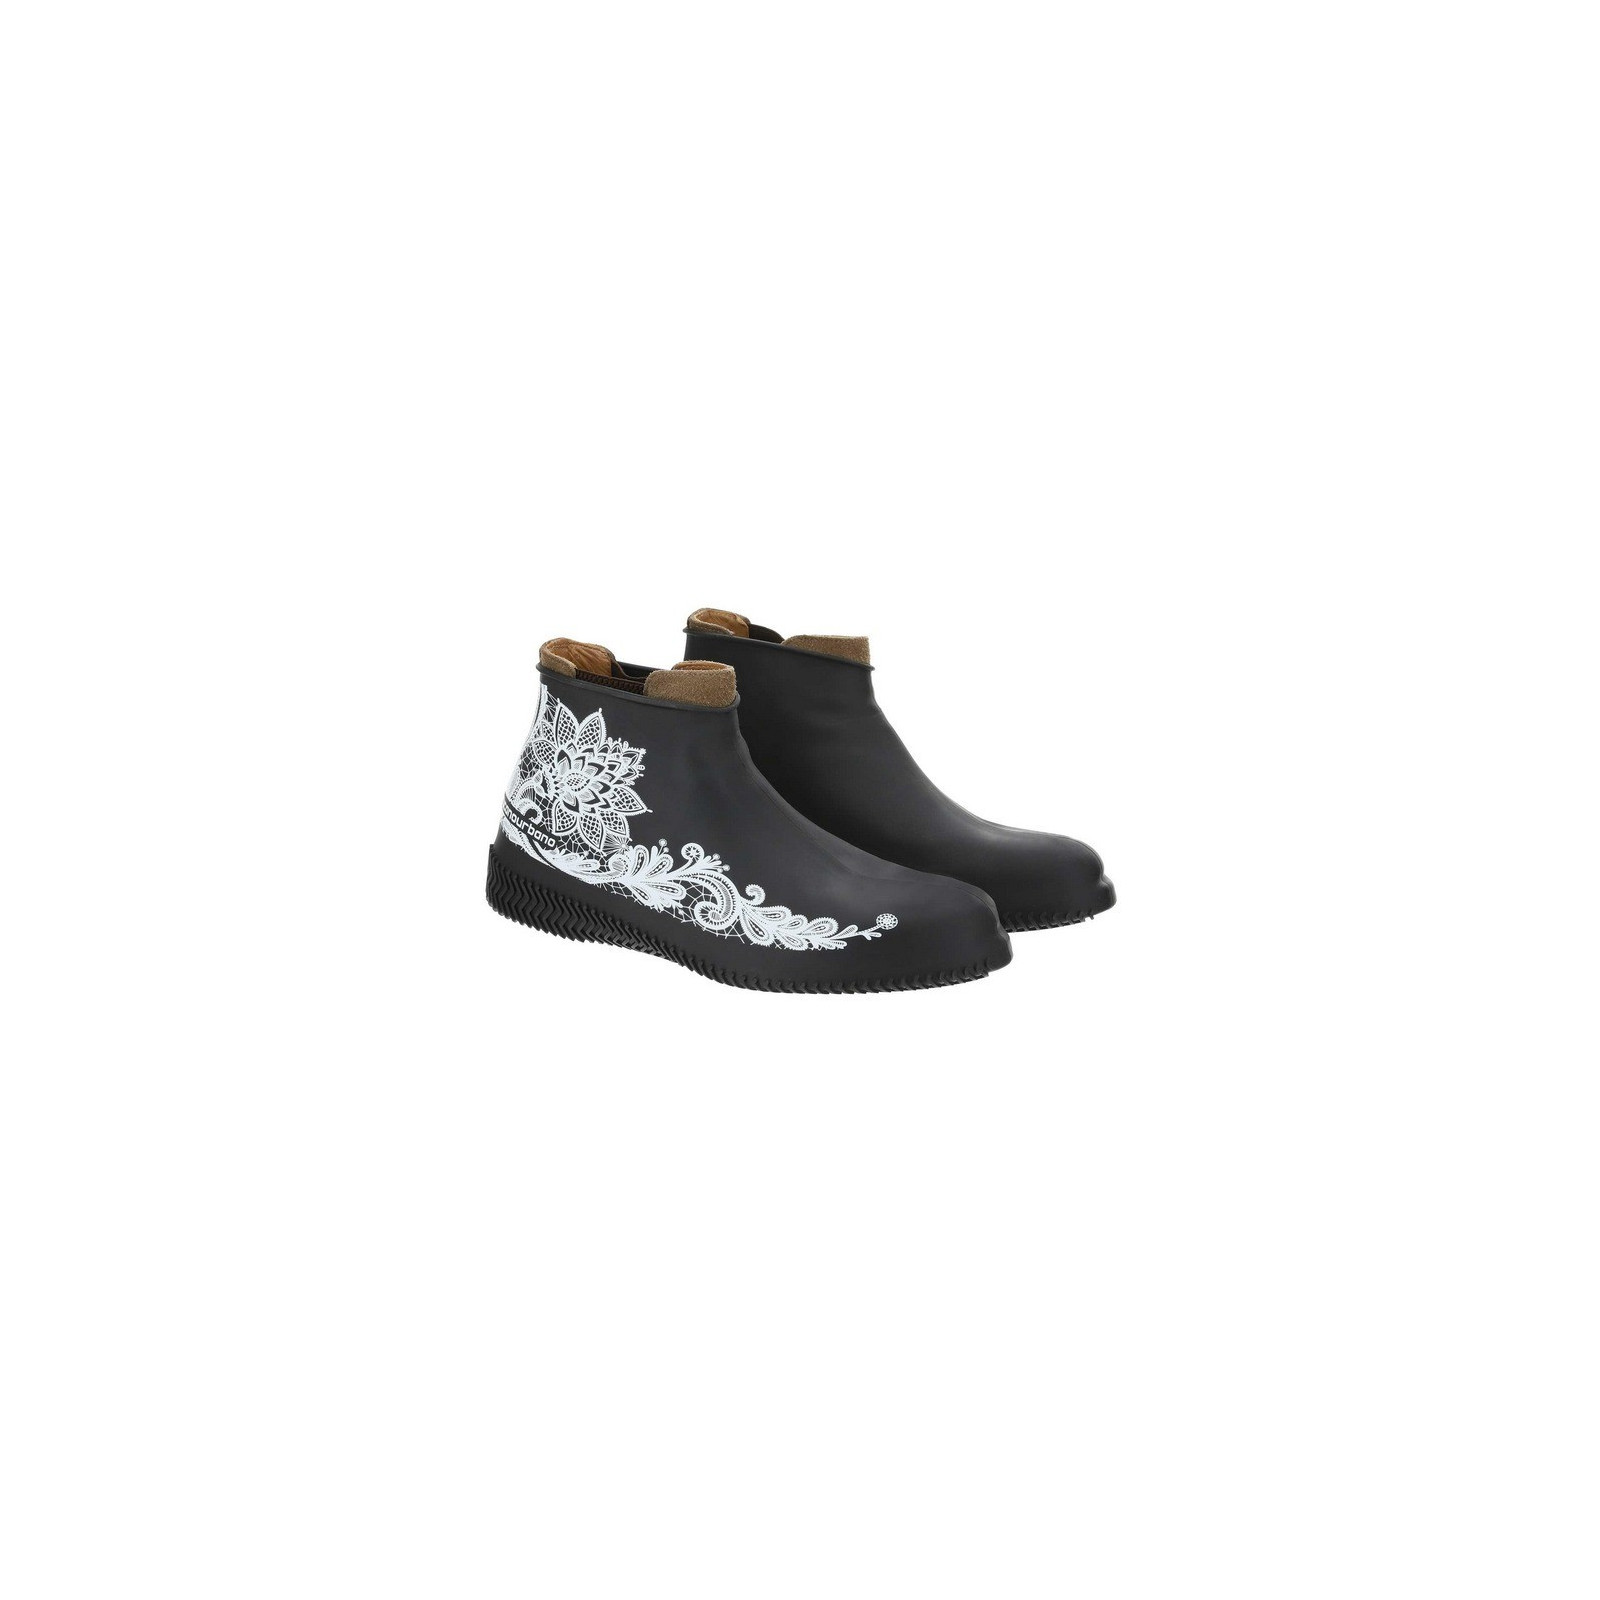 Couvre-Chaussures Tucano Urbano Footerine Noir/Fleur